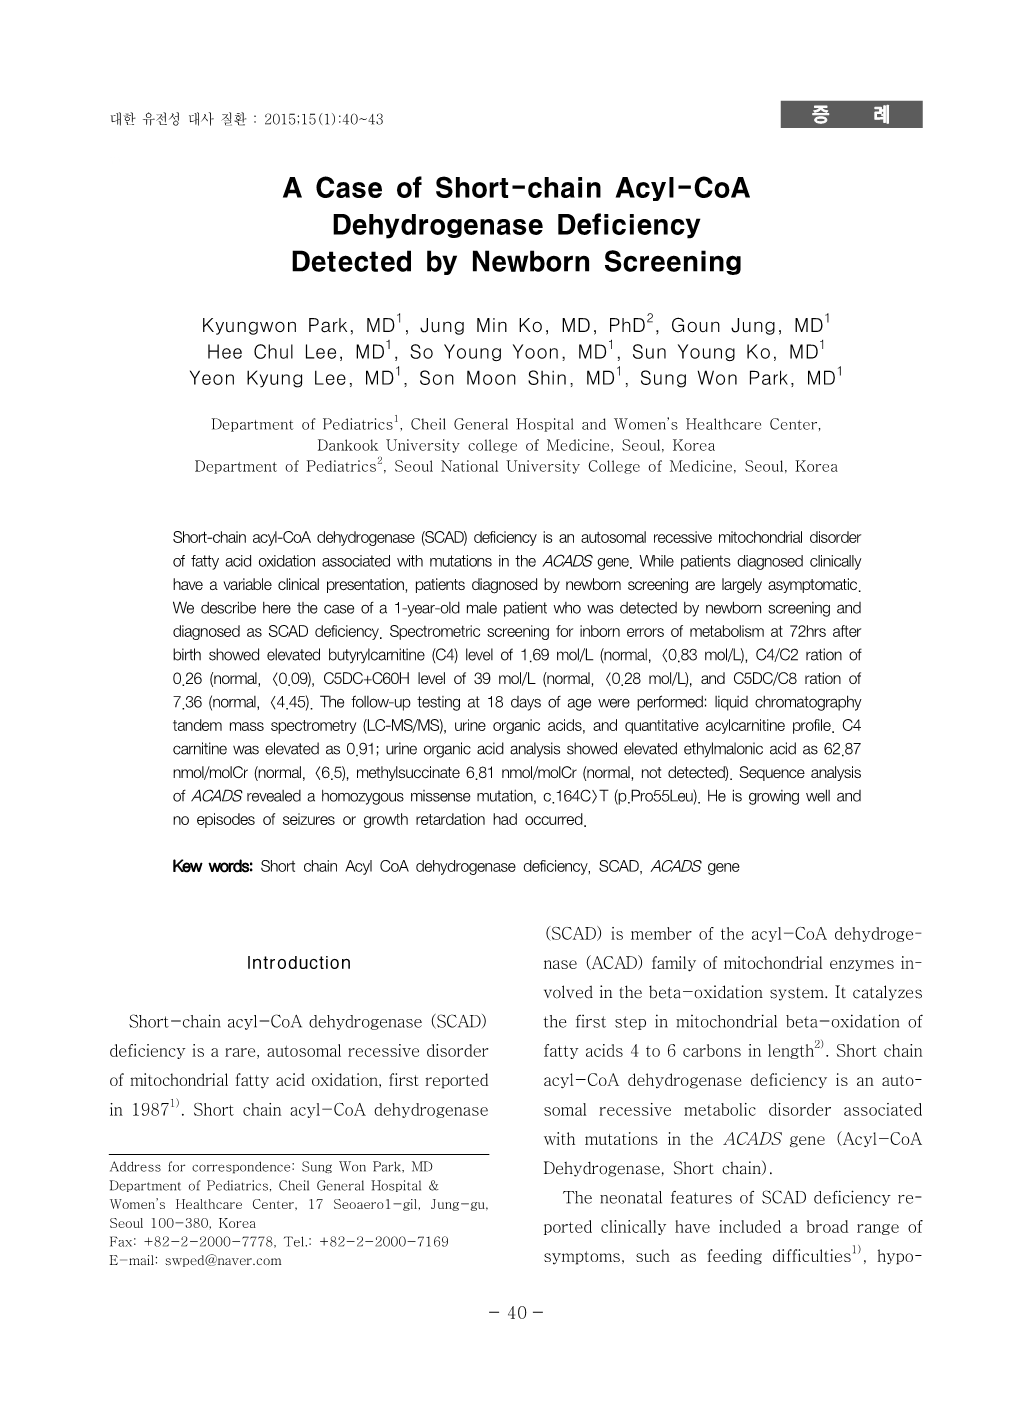 A Case of Short-Chain Acyl-Coa Dehydrogenase Deficiency Detected by Newborn Screening